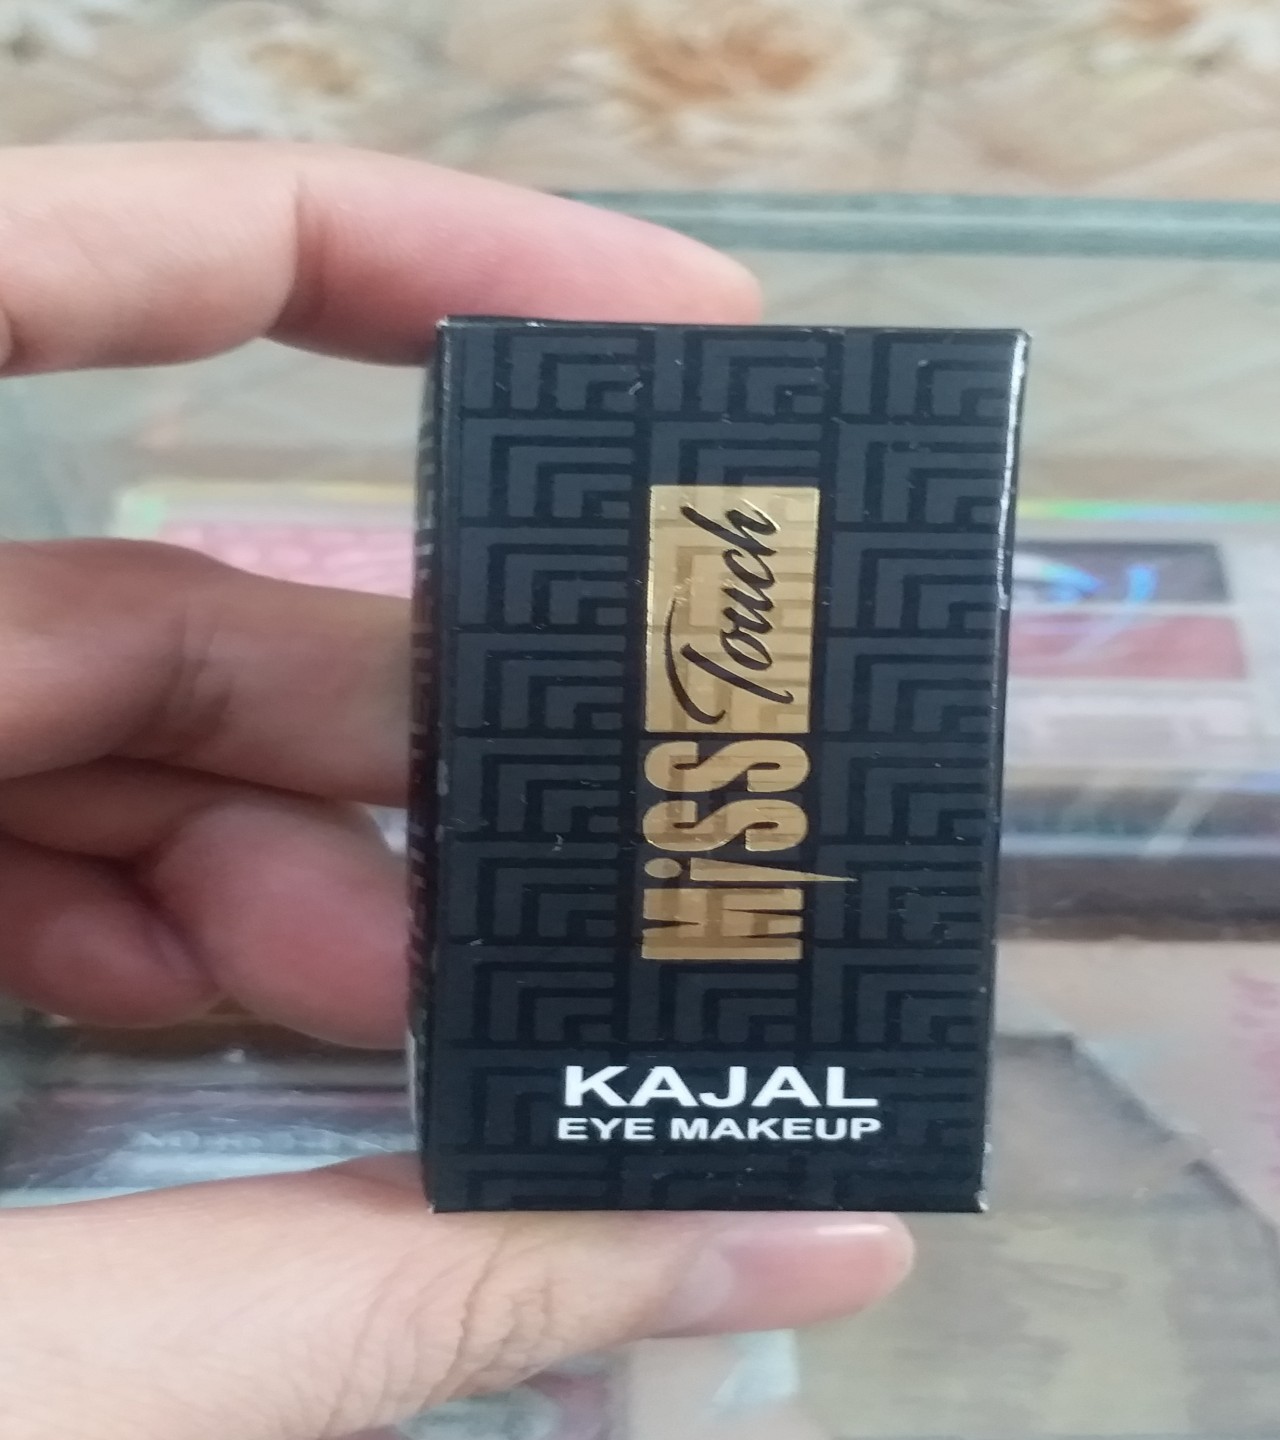 Original Miss Touch Waterproof Eye Makeup Kajal White